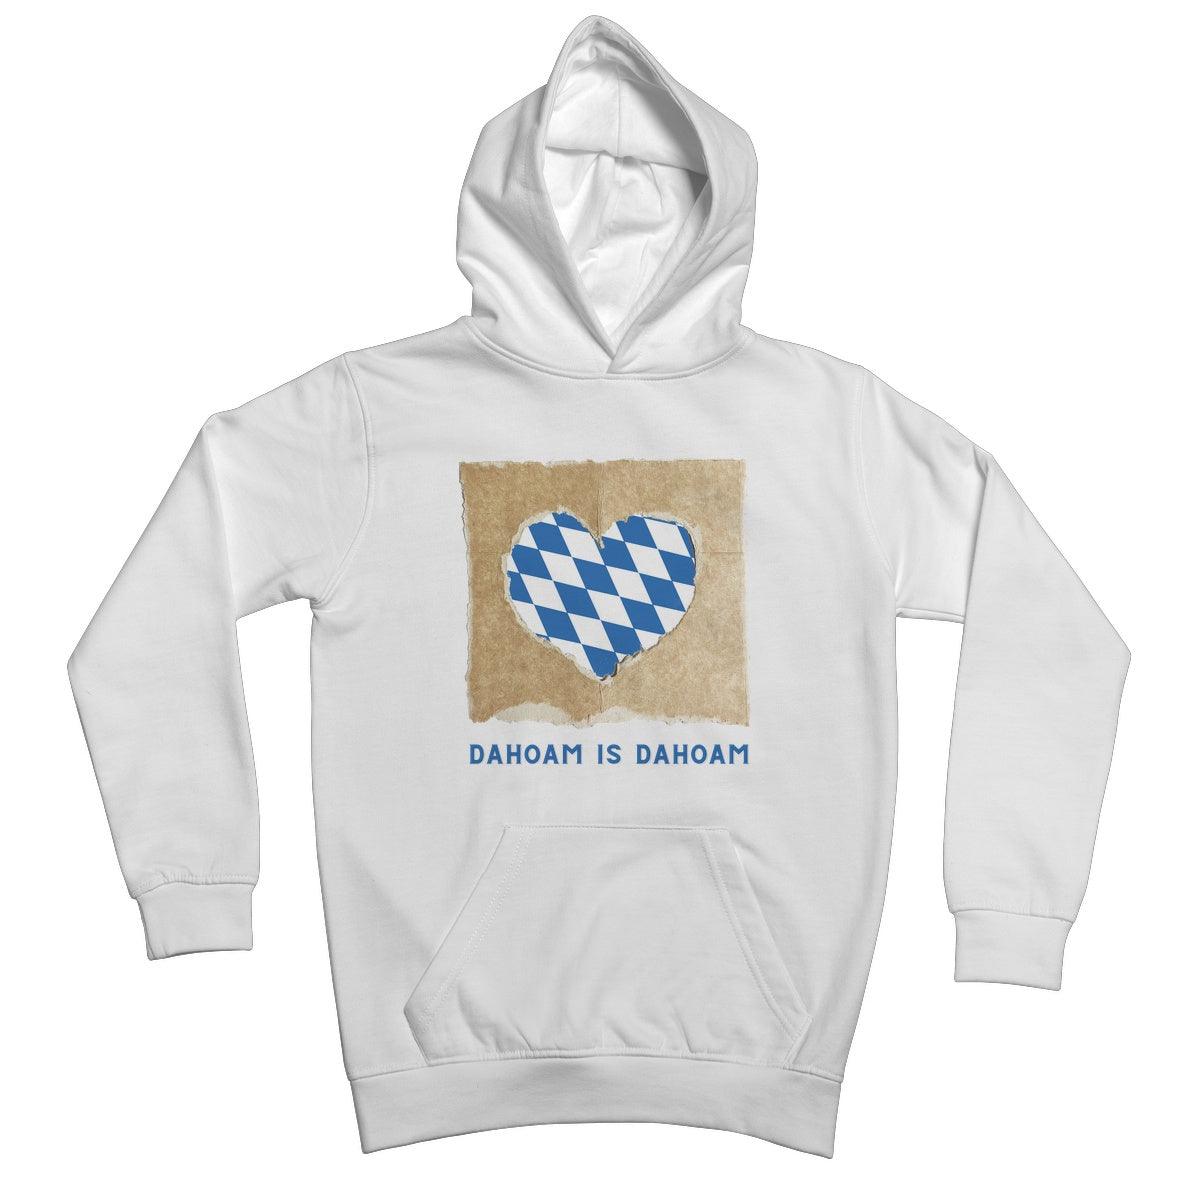 Kids's Bavarian Graphic Hoodie "Dahoam is Dahoam" heart print - White - Bavari Shop - Bavarian Outfits, Dirndl, Lederhosen & Accessories